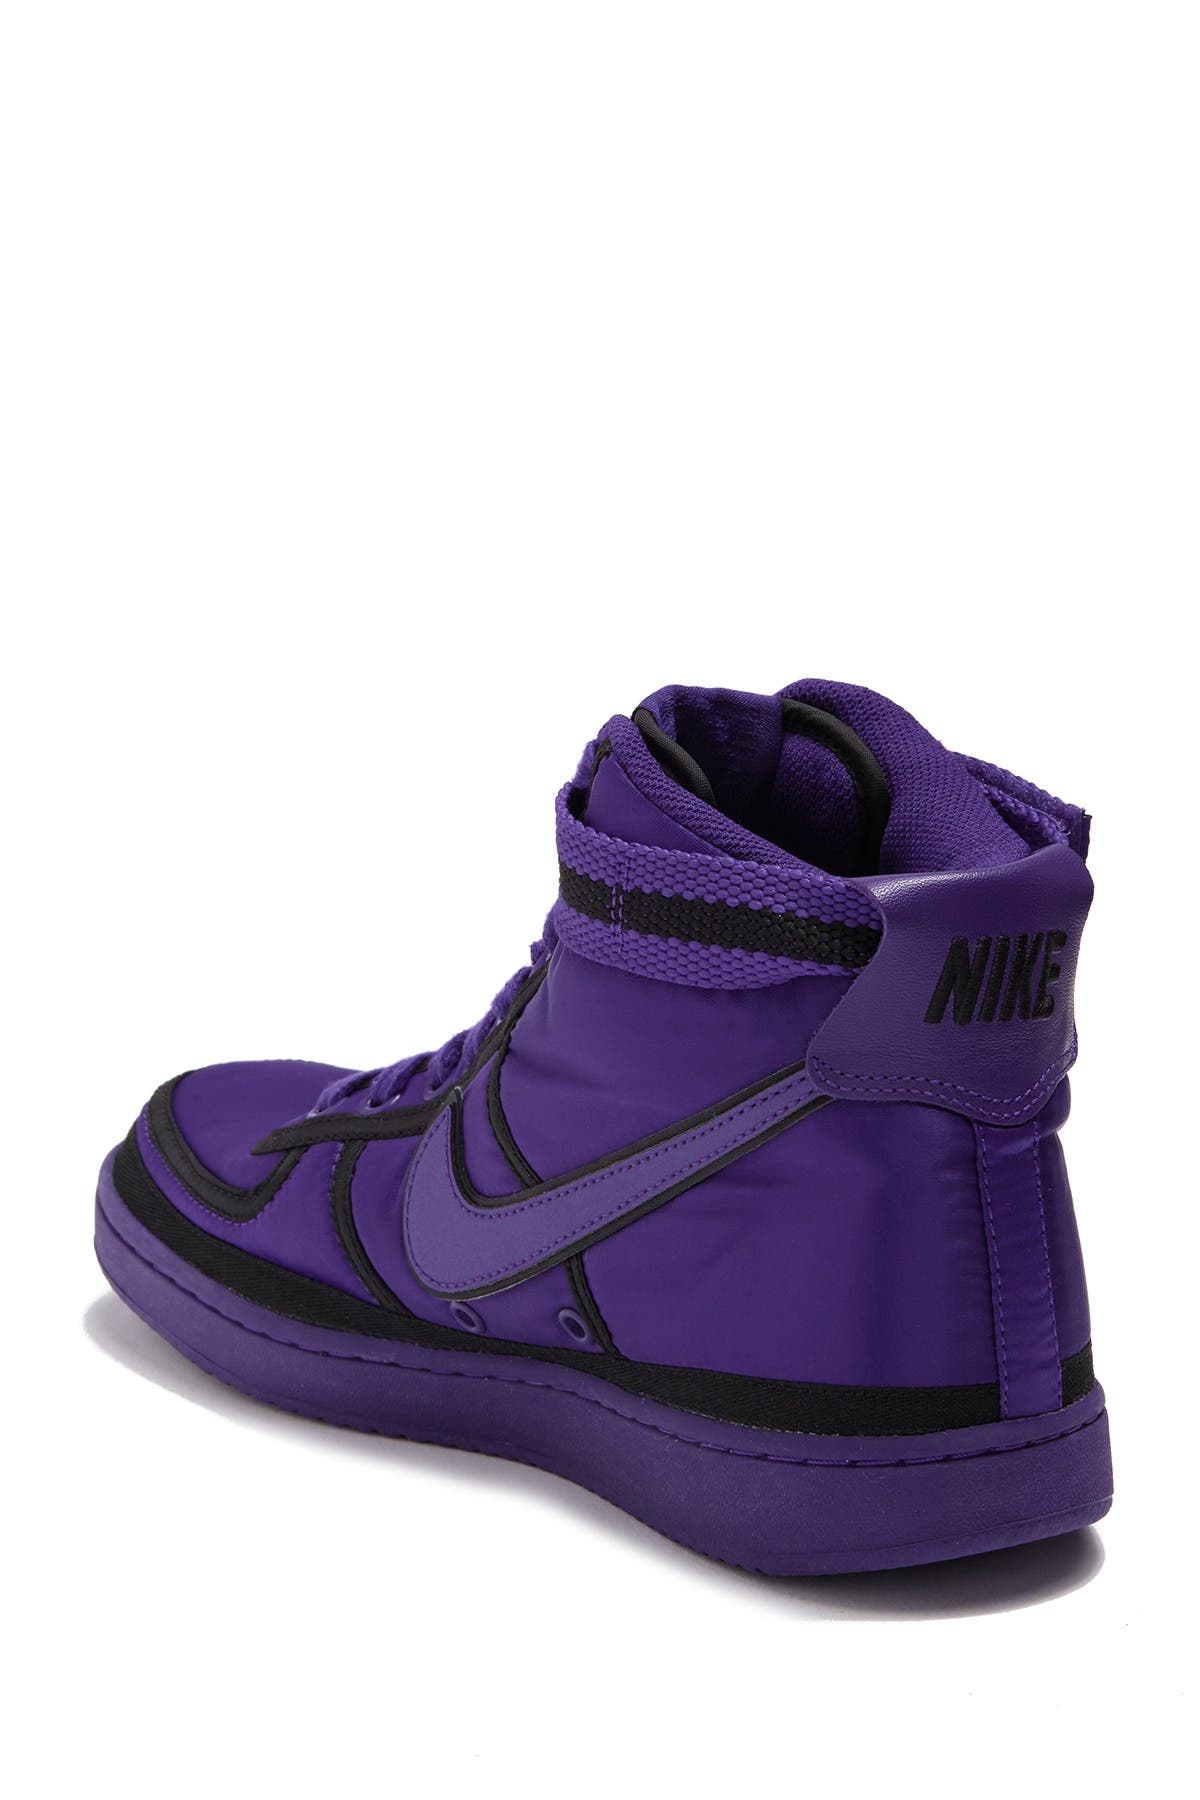 purple nike shoes high tops